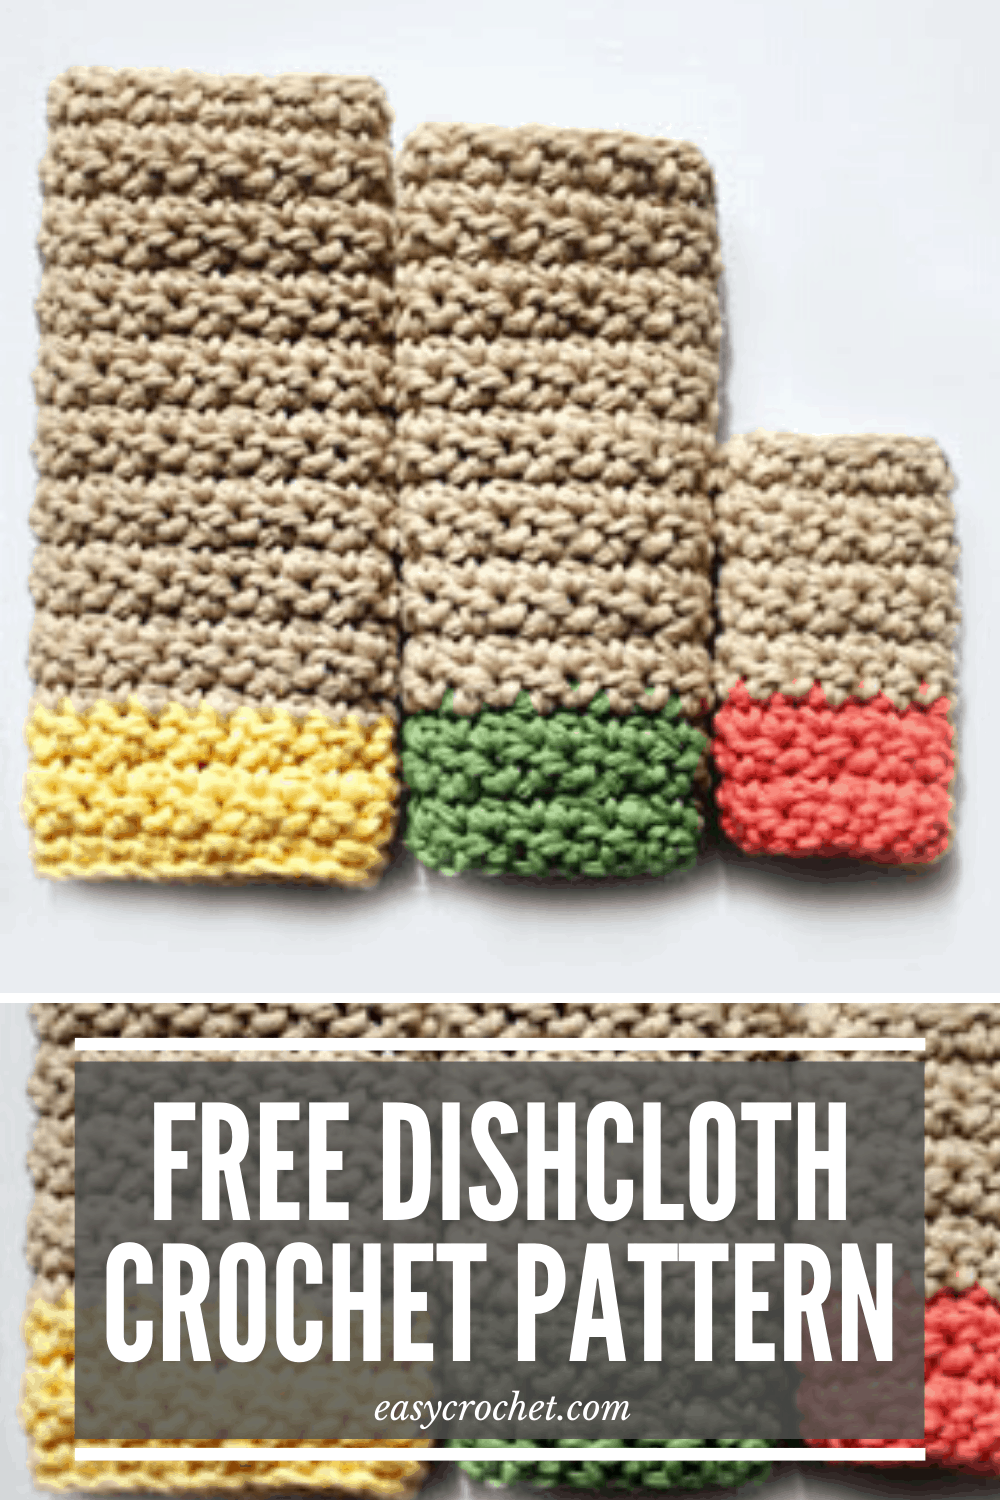 Free dishcloth crochet patterns